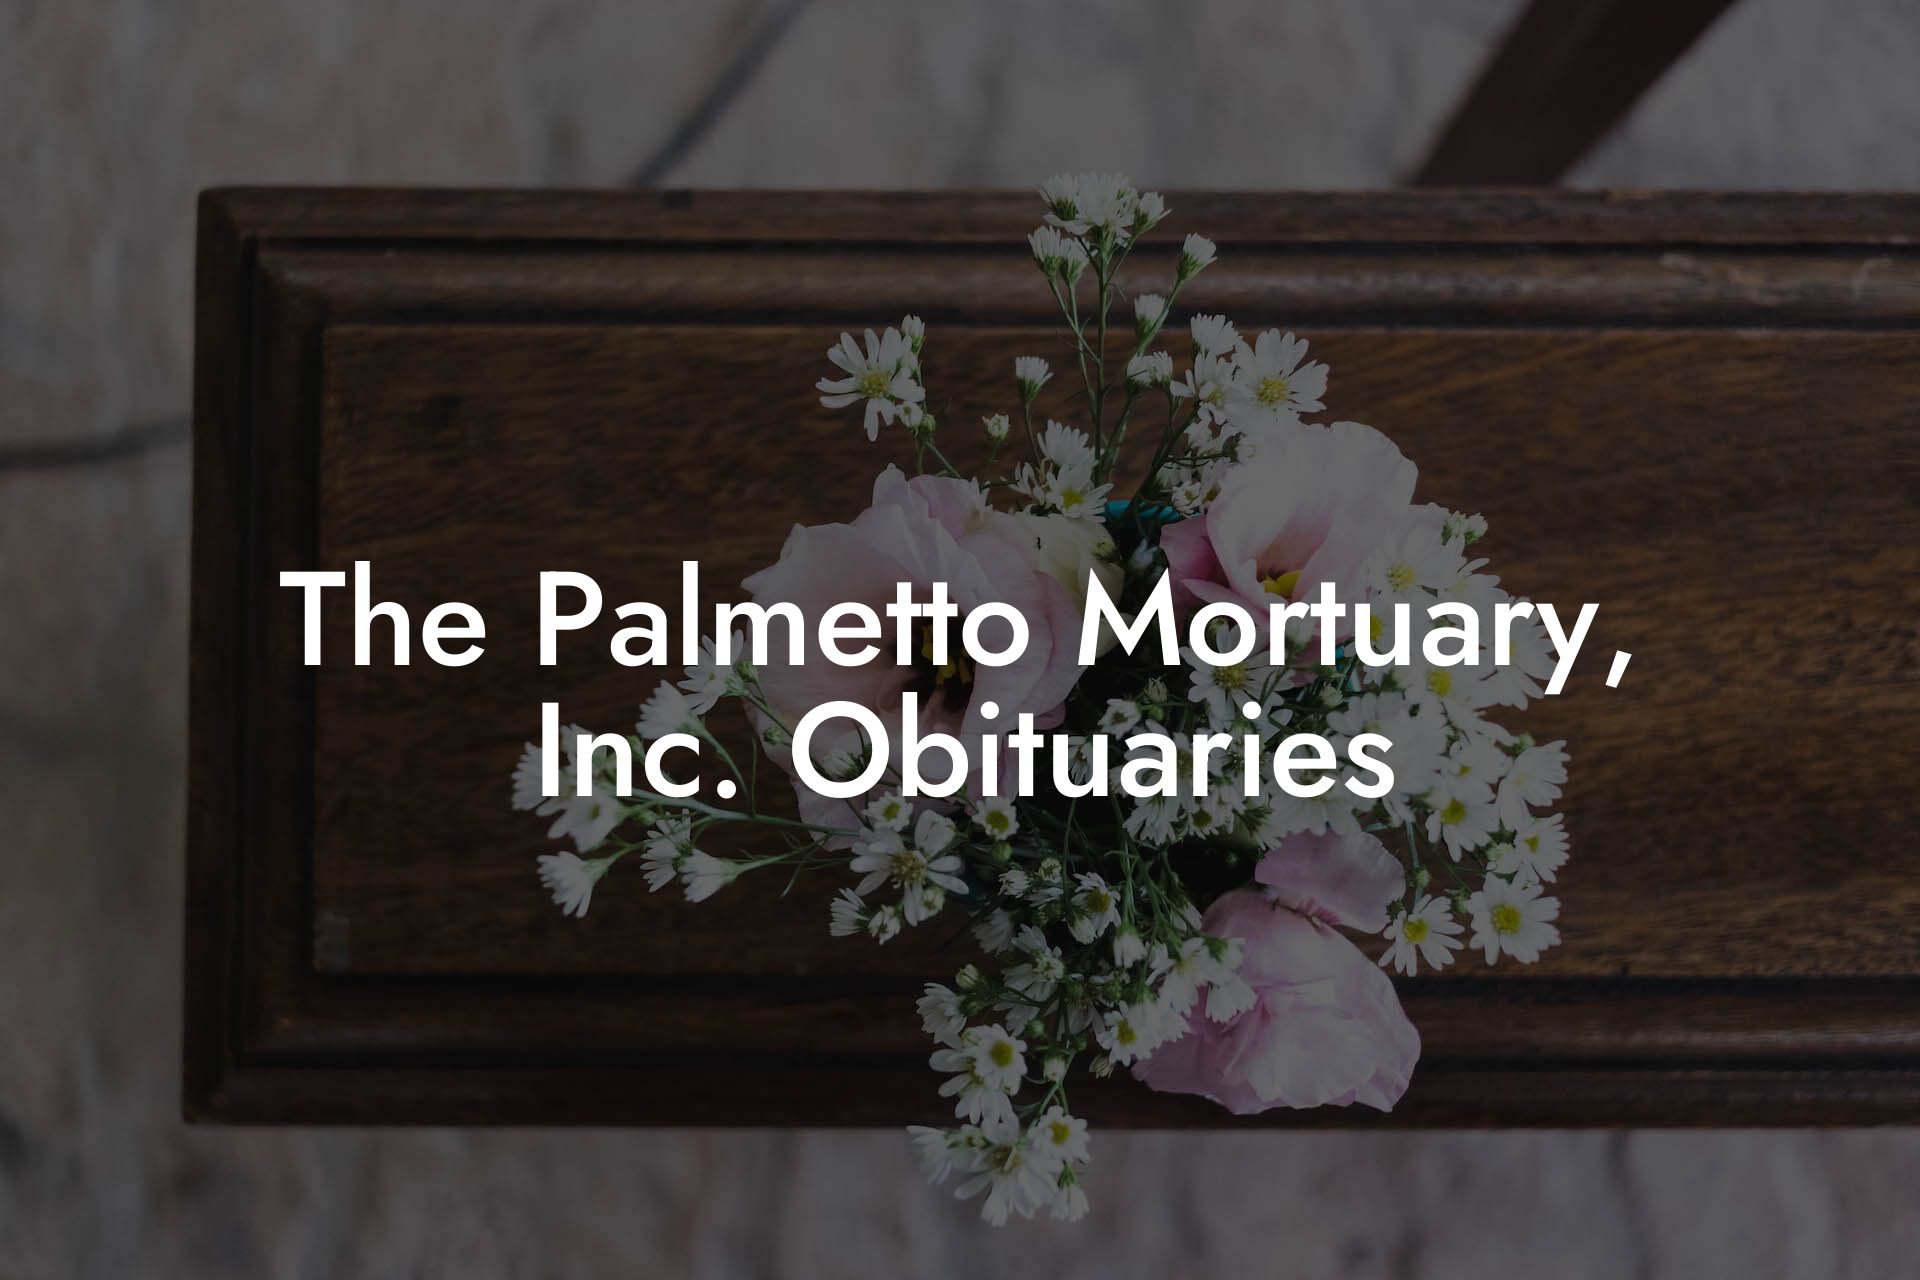 The Palmetto Mortuary, Inc. Obituaries